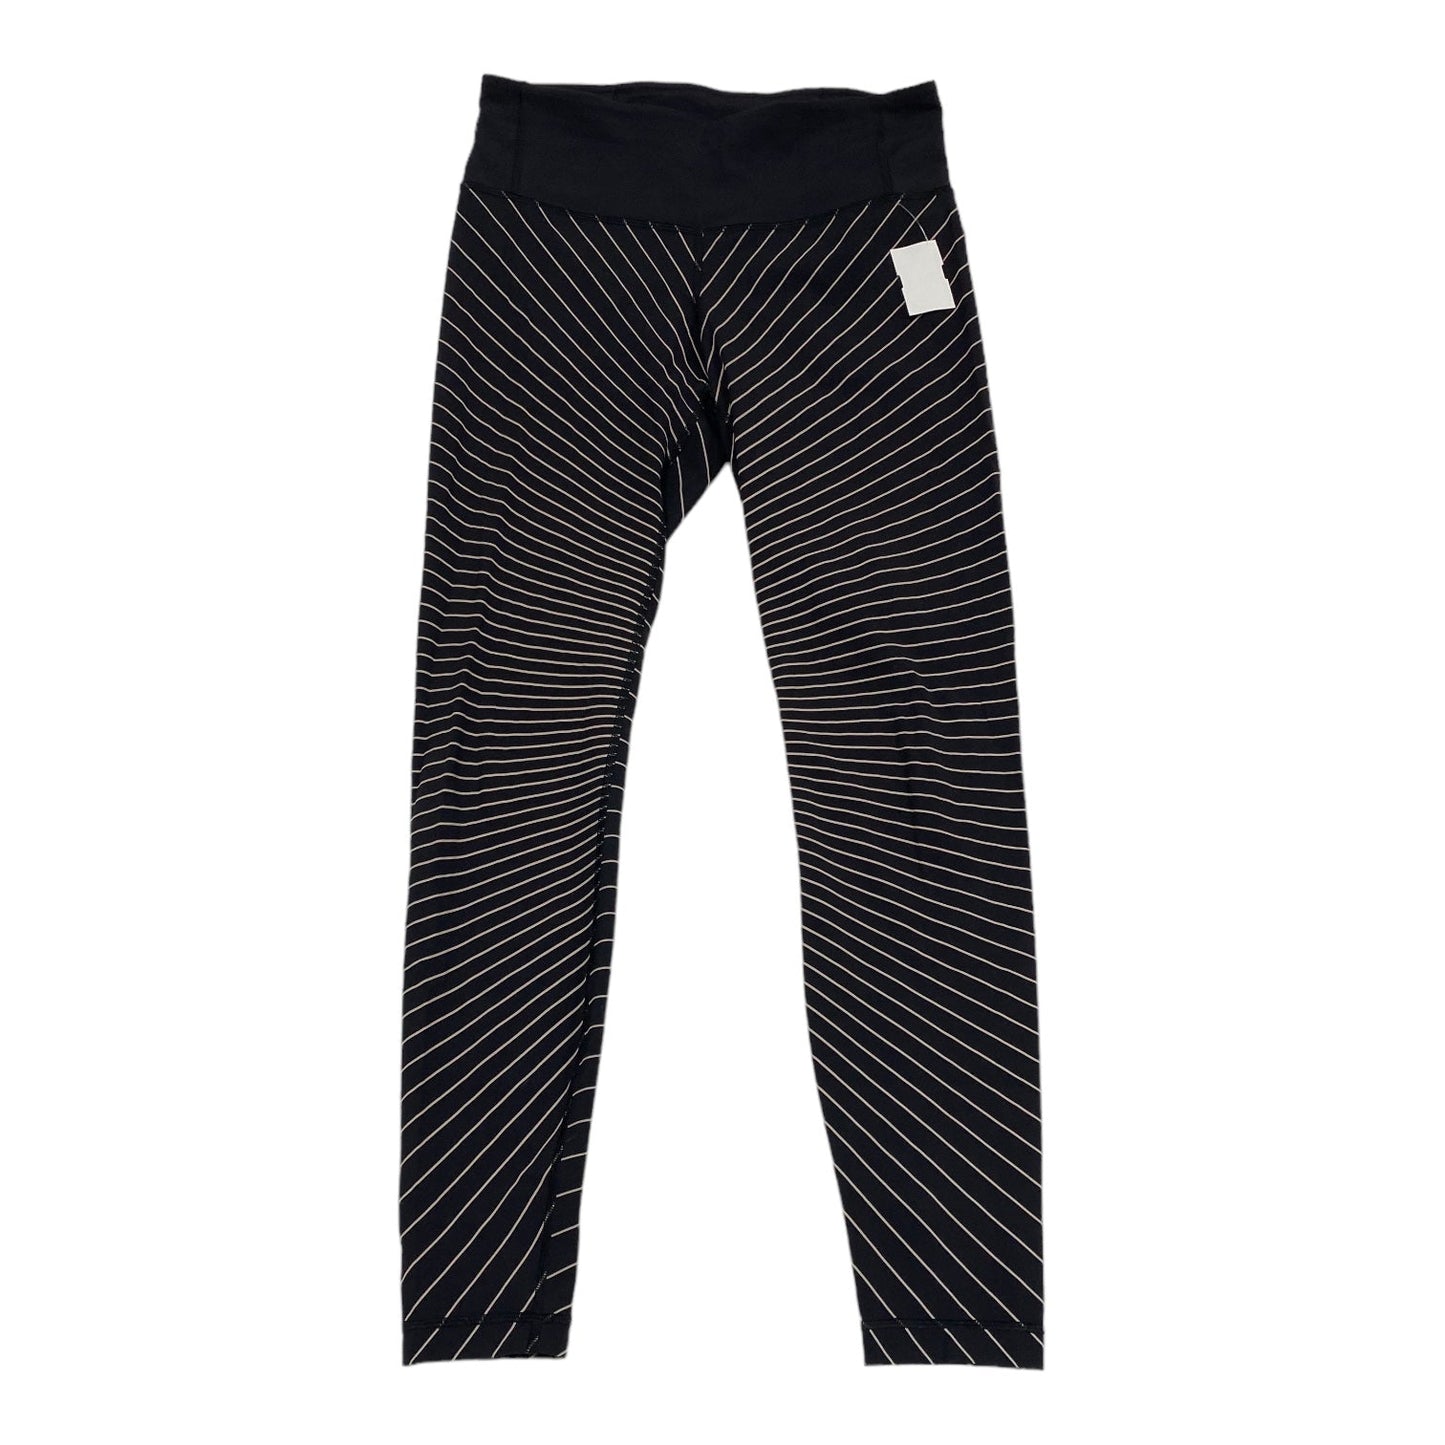 Striped Pattern Athletic Pants Lululemon, Size 8